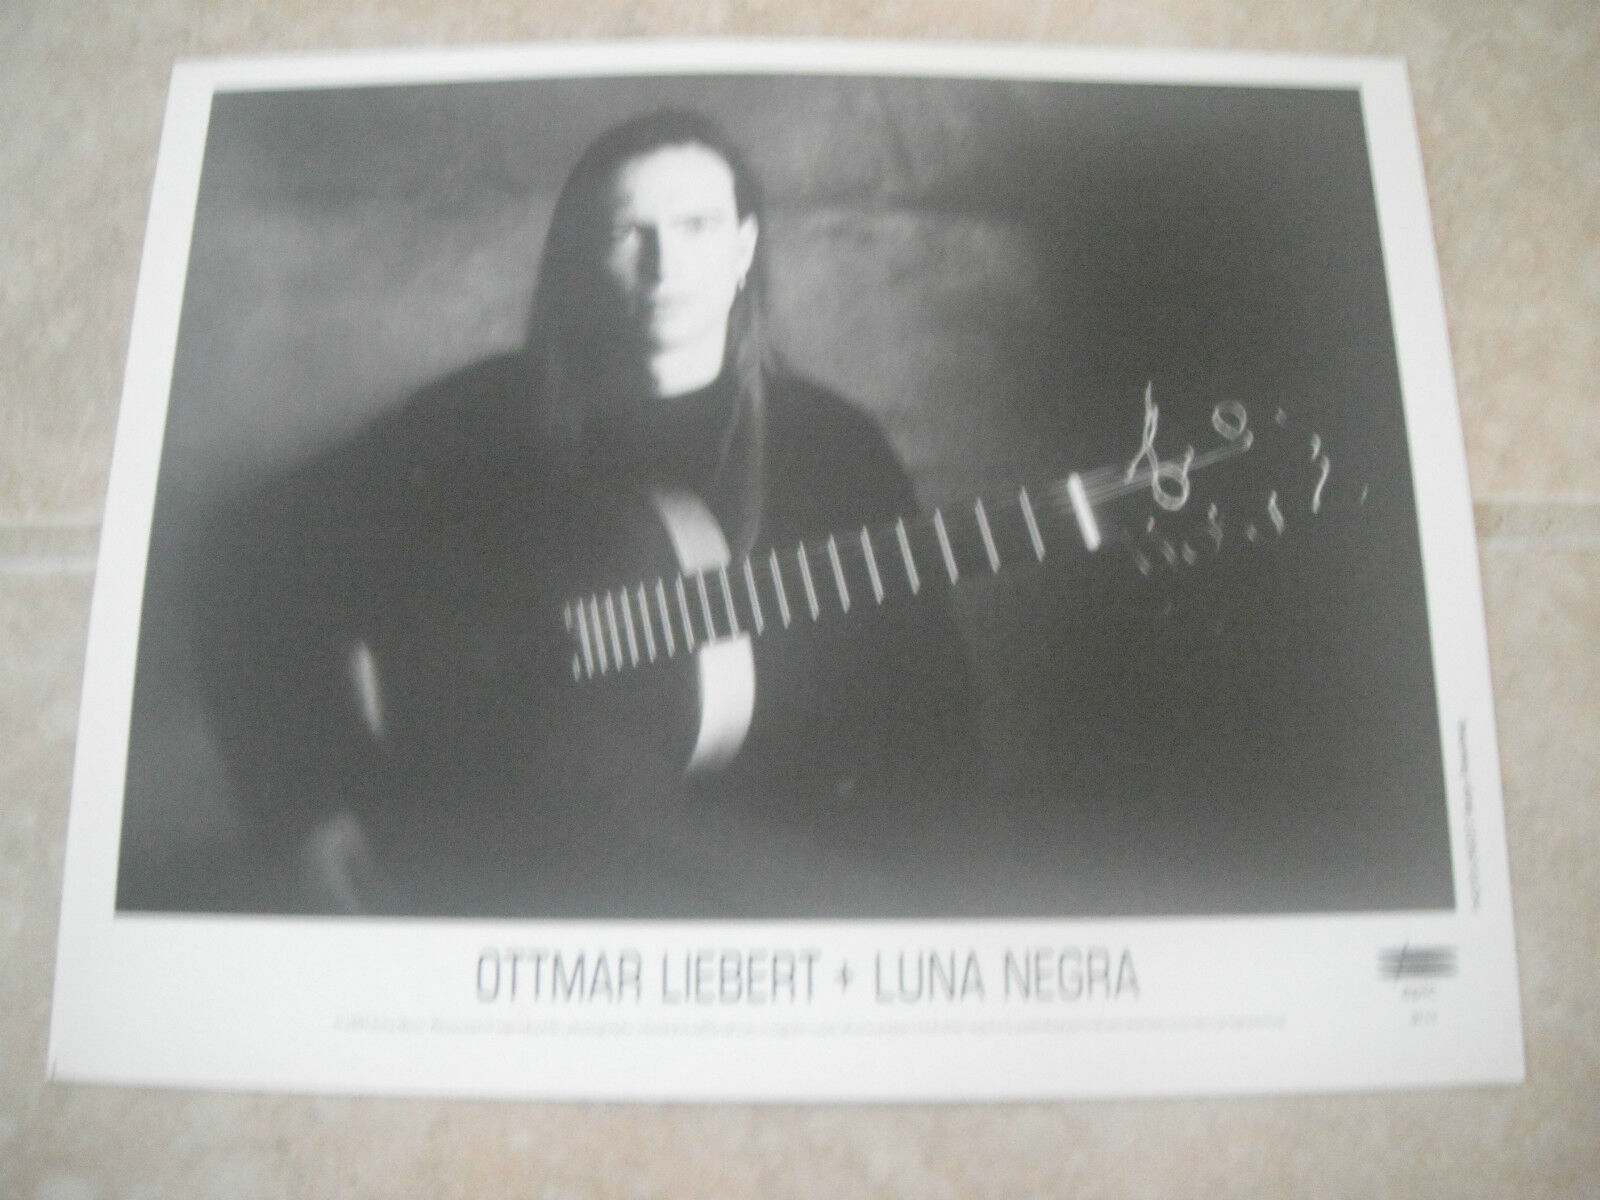 Ottmar Liebert + Luna Negra B&W 8x10 Promo Photo Poster painting Picture Original